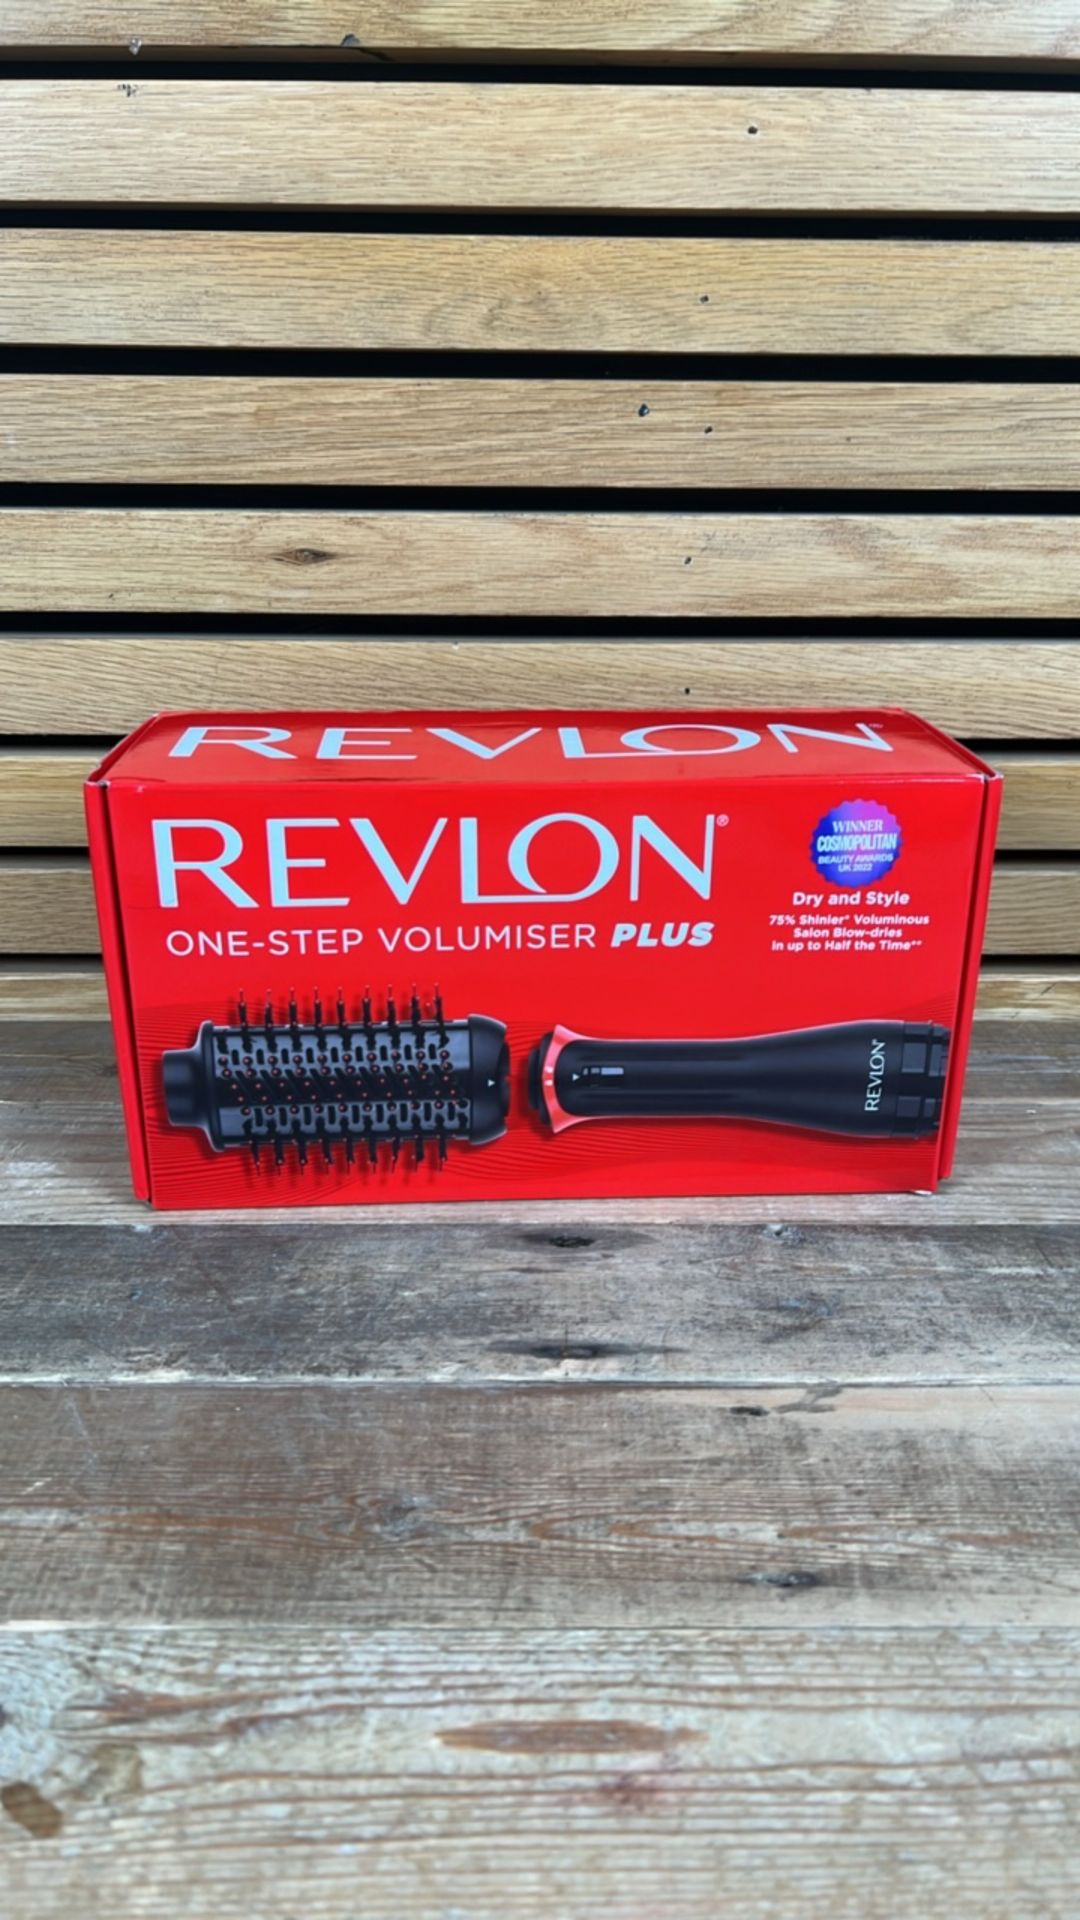 Revlon One-Step Volumiser Plus